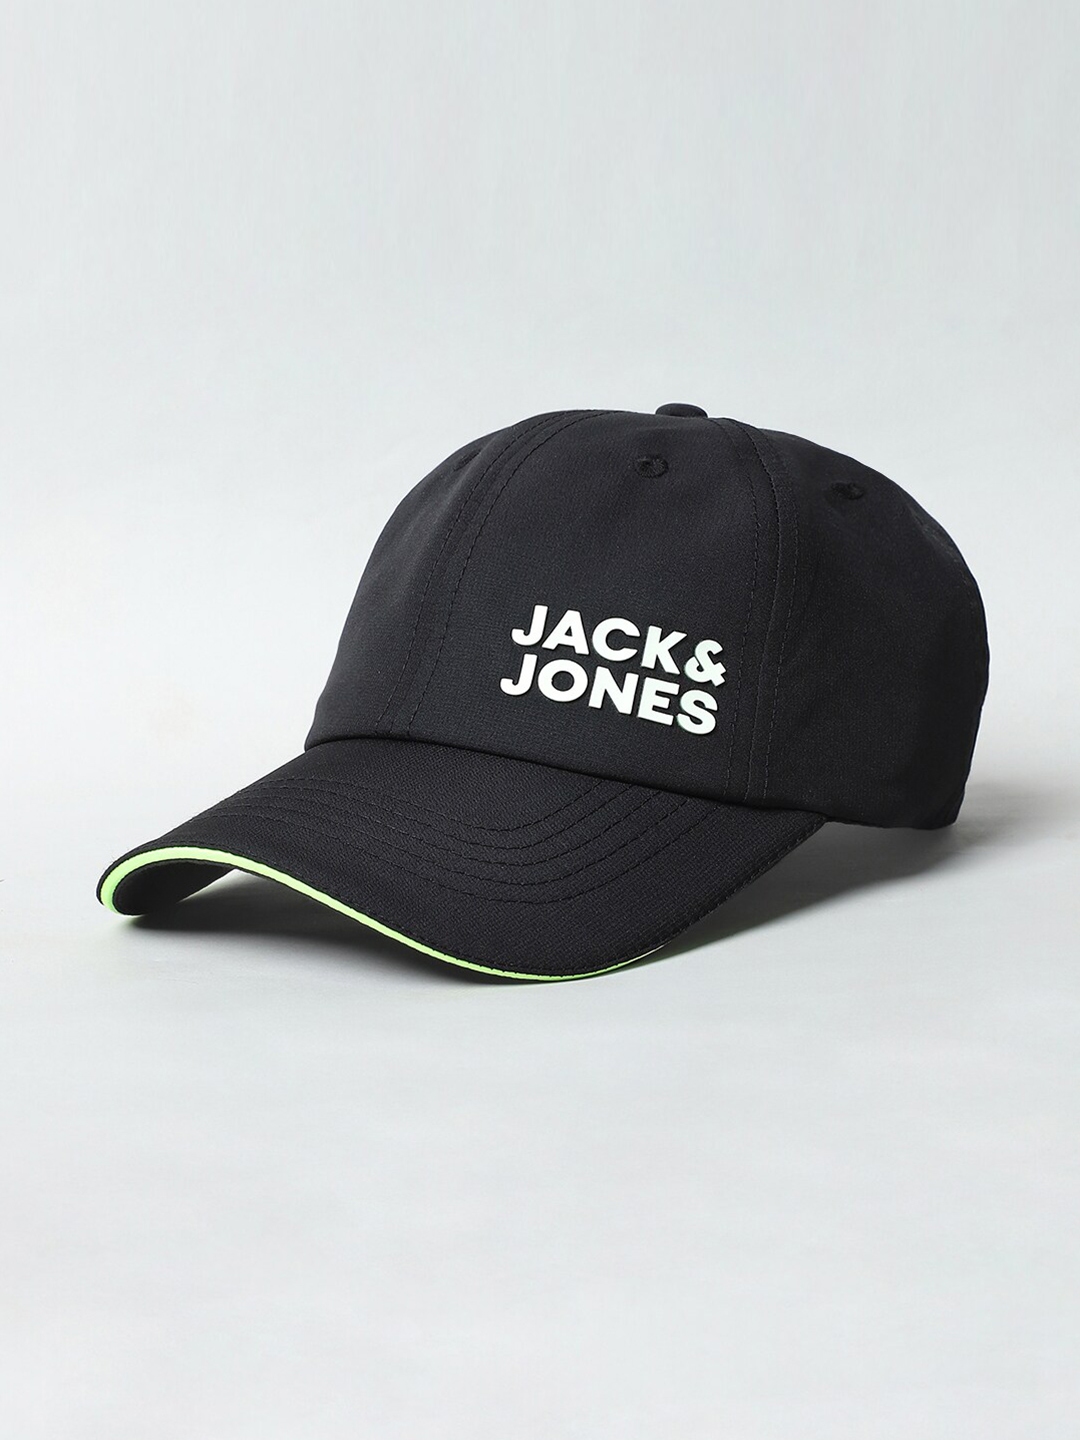 Buy Jack & Jones Men Black & White Printed Baseball Cap Caps for Men